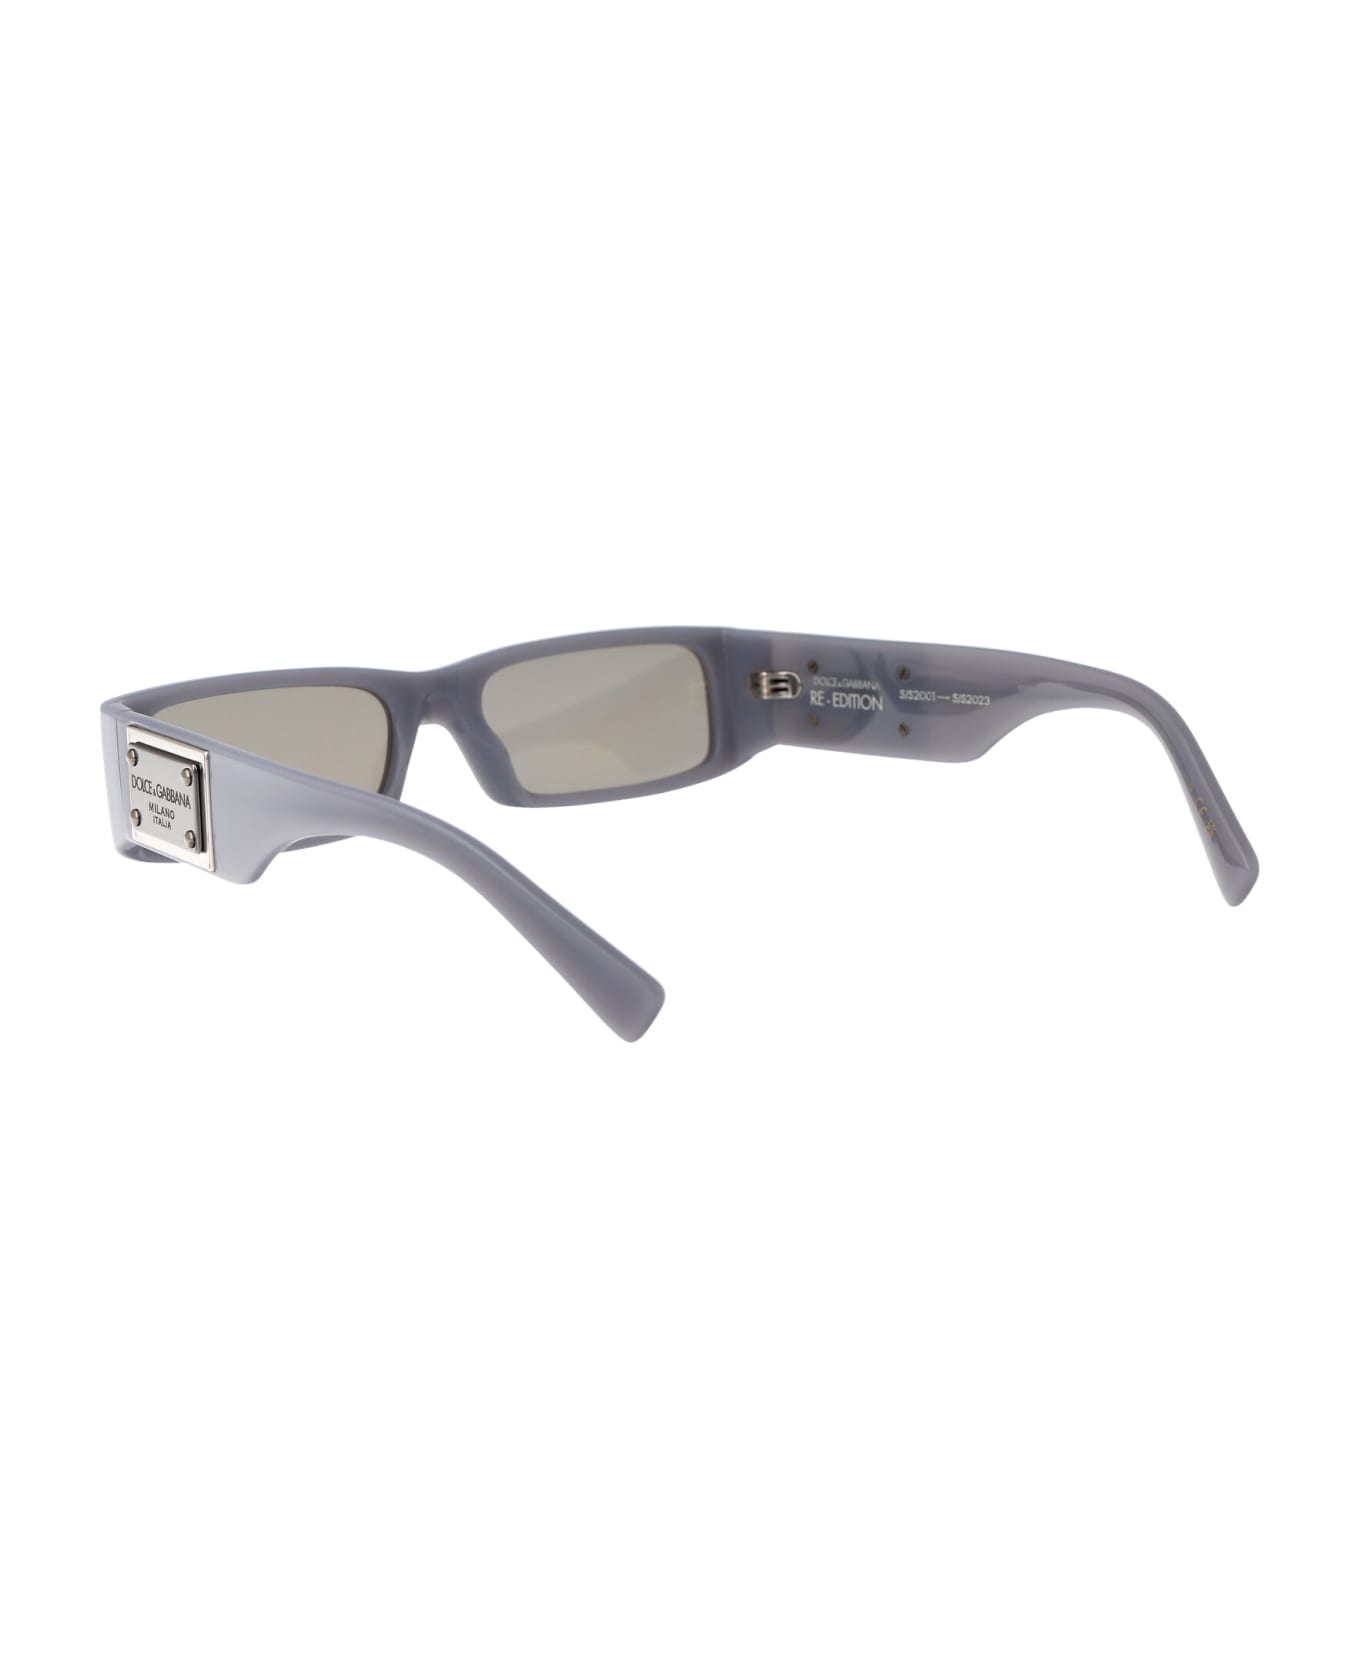 Dolce & Gabbana Eyewear 0dg4444 Sunglasses - 30906G Grey